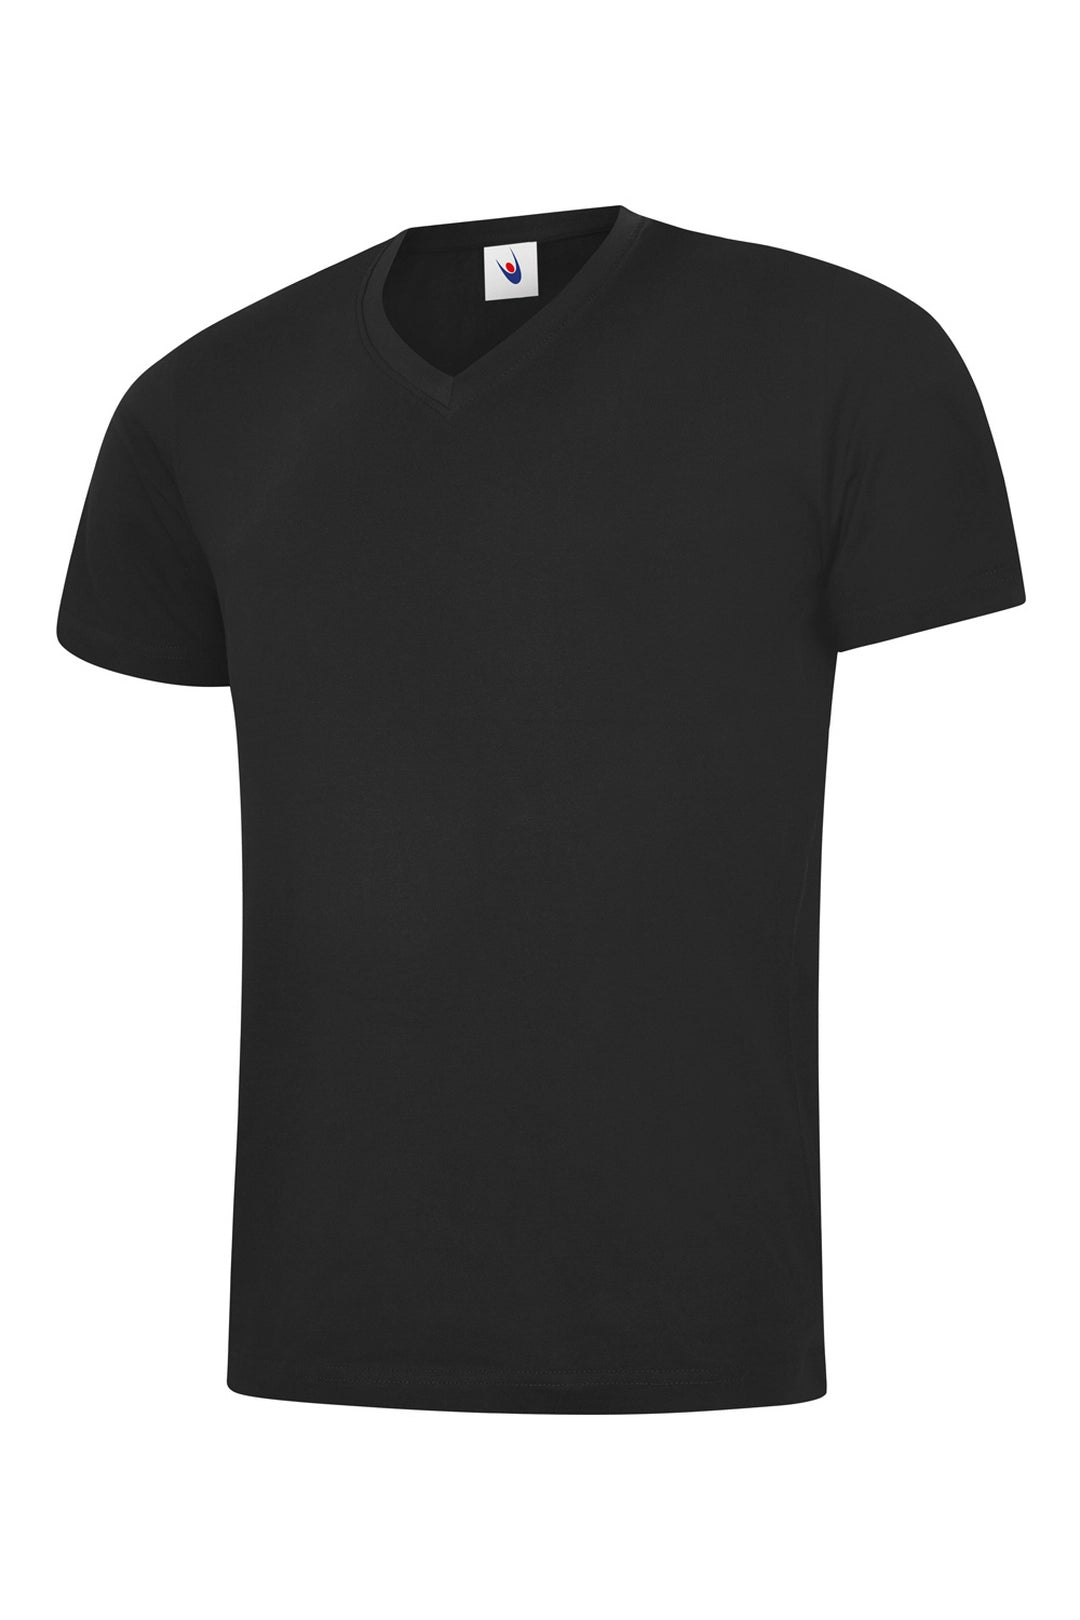 Uneek Clothing UC317 Classic V-Neck T-shirt - COOZO